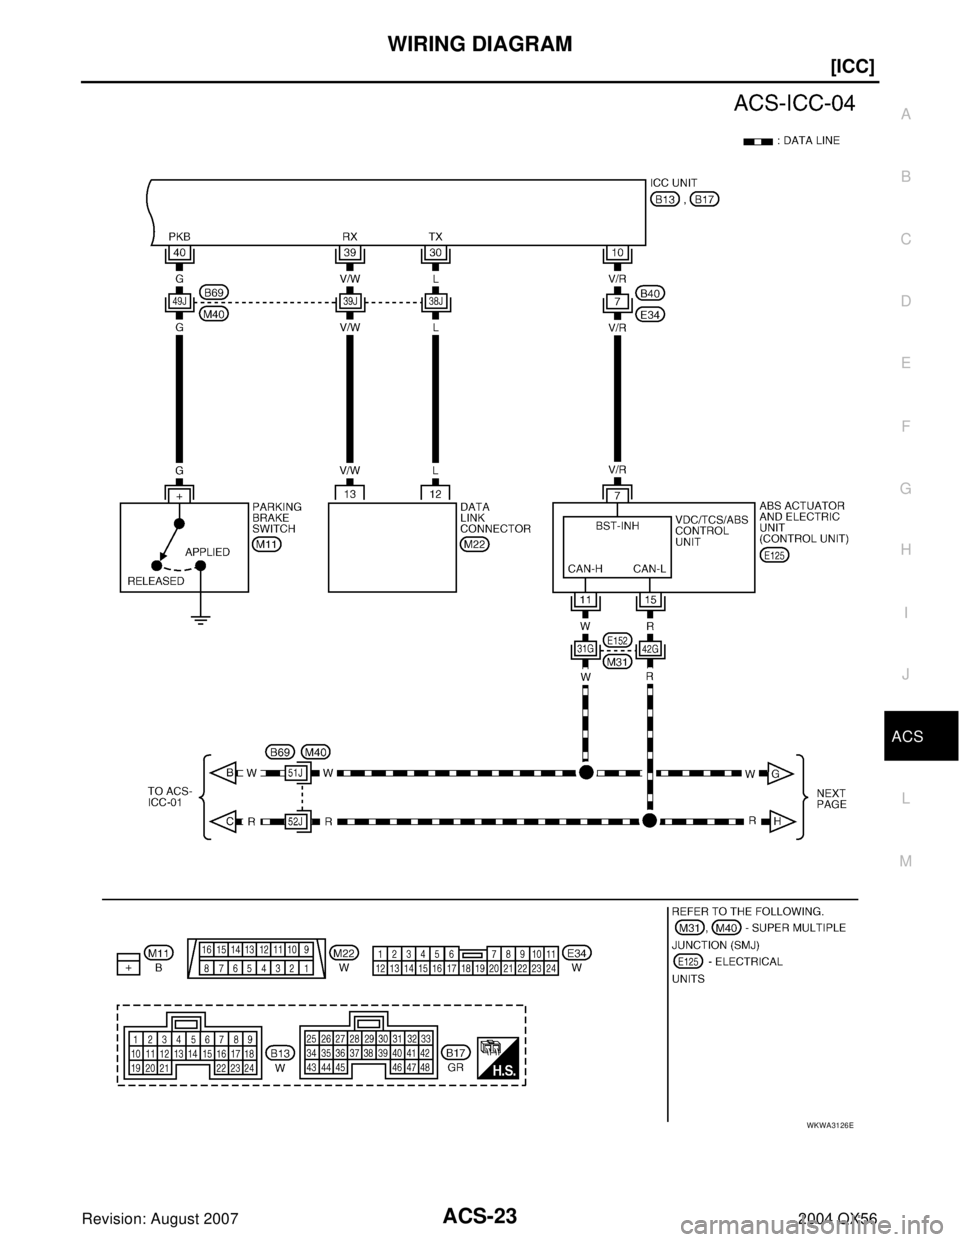 INFINITI QX56 2004  Factory Service Manual WIRING DIAGRAM
ACS-23
[ICC]
C
D
E
F
G
H
I
J
L
MA
B
ACS
Revision: August 20072004 QX56
WKWA3126E 